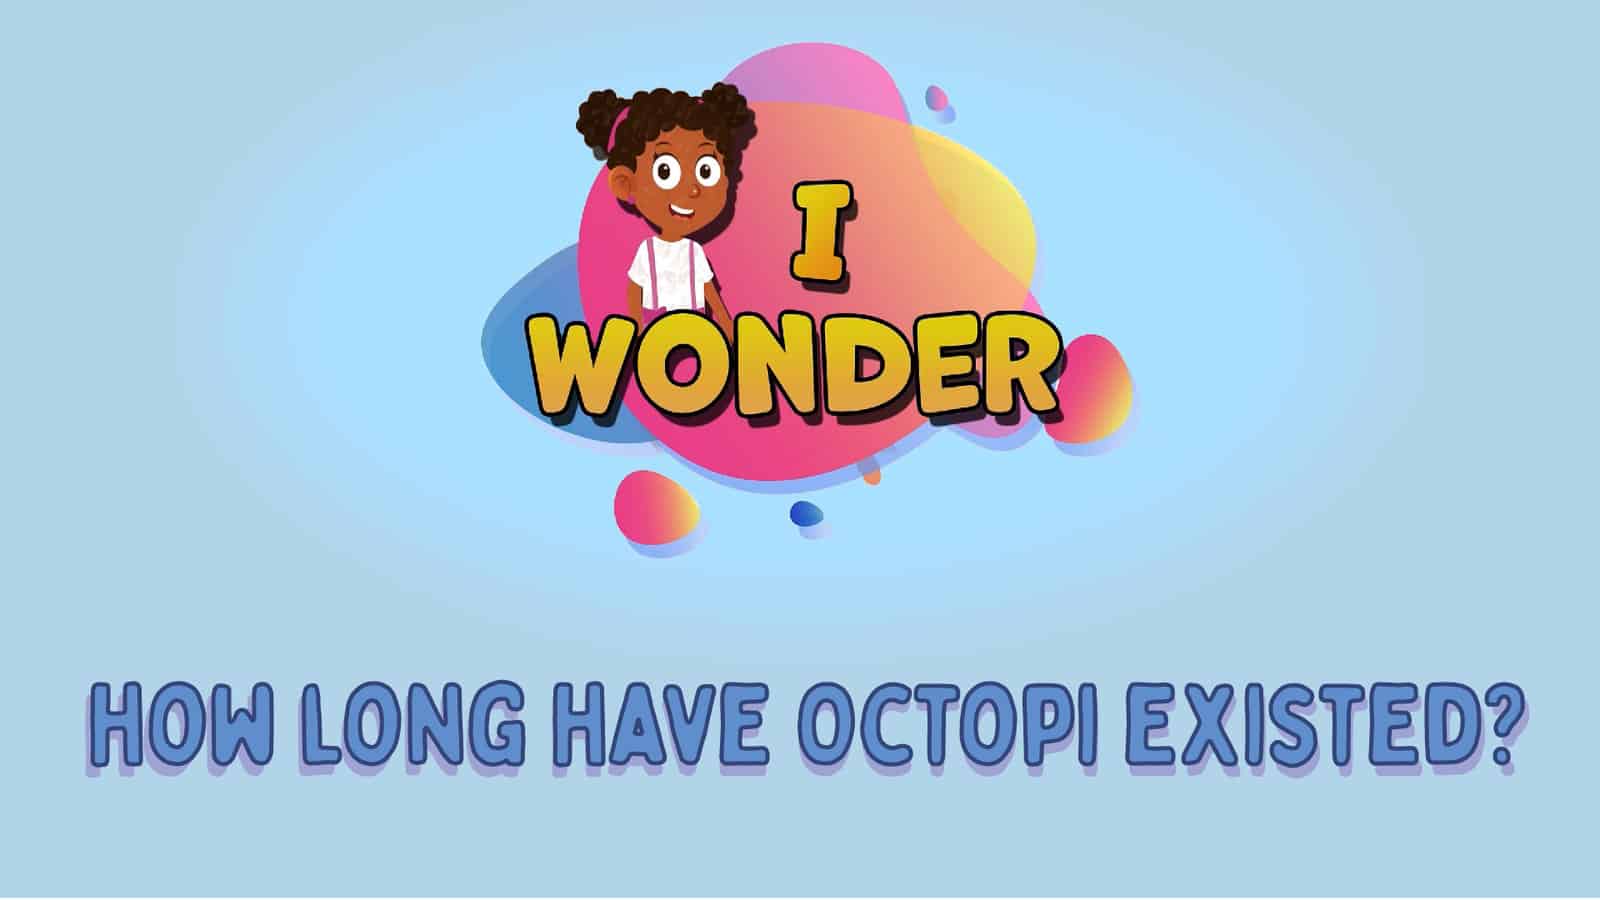 Octopi Existed LearningMole